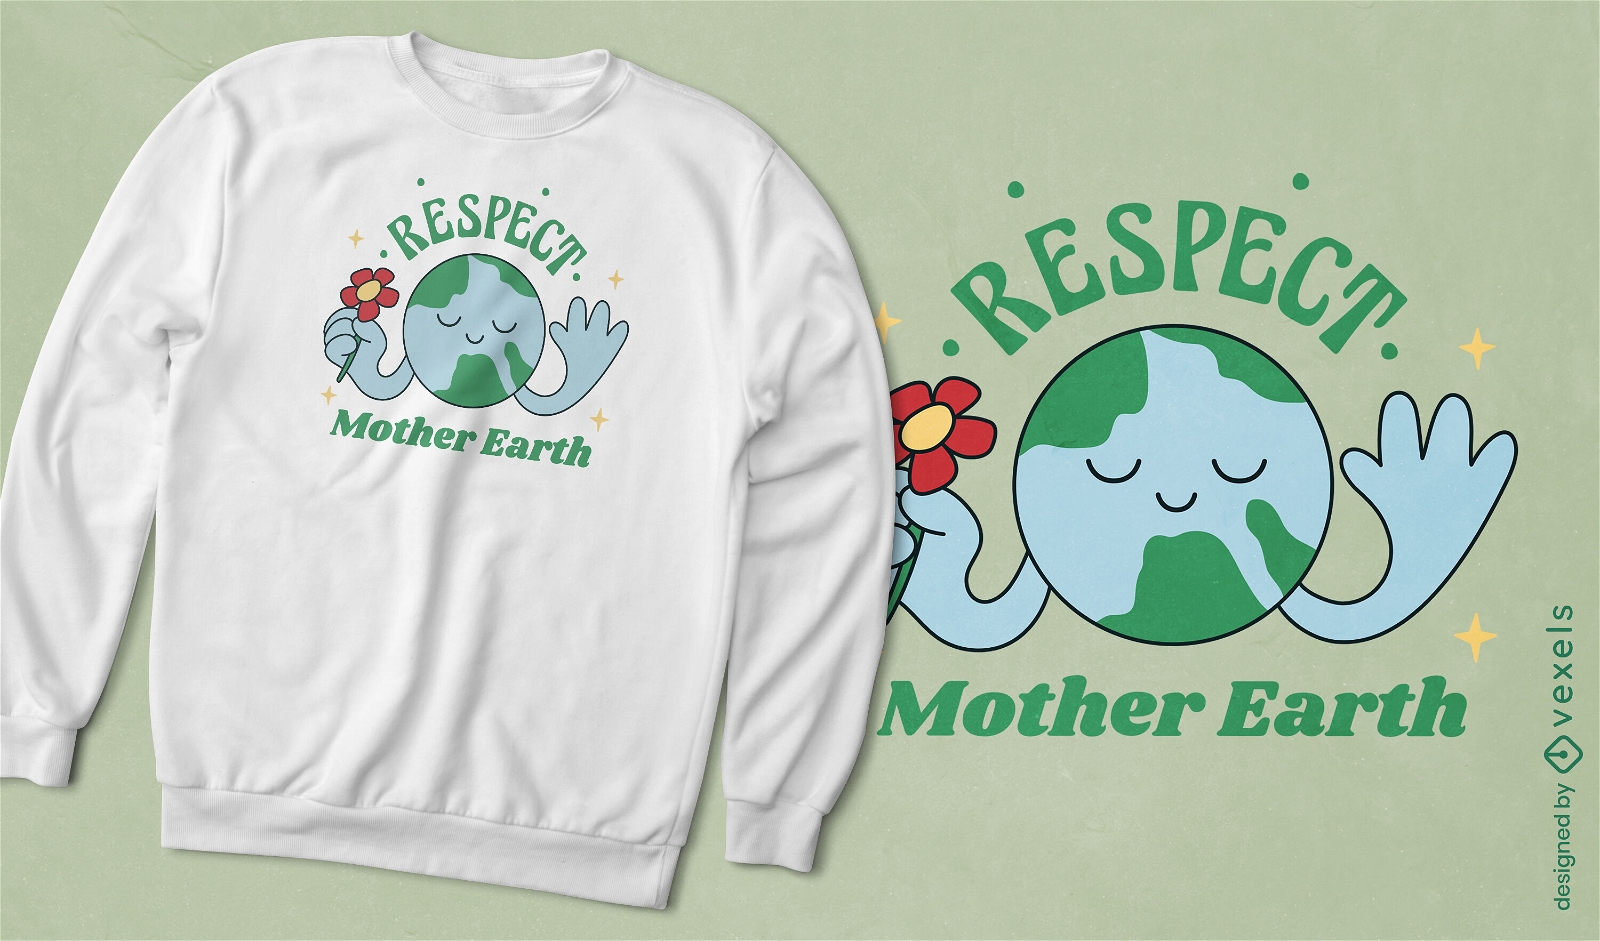 Respeite o design da camiseta da M?e Terra